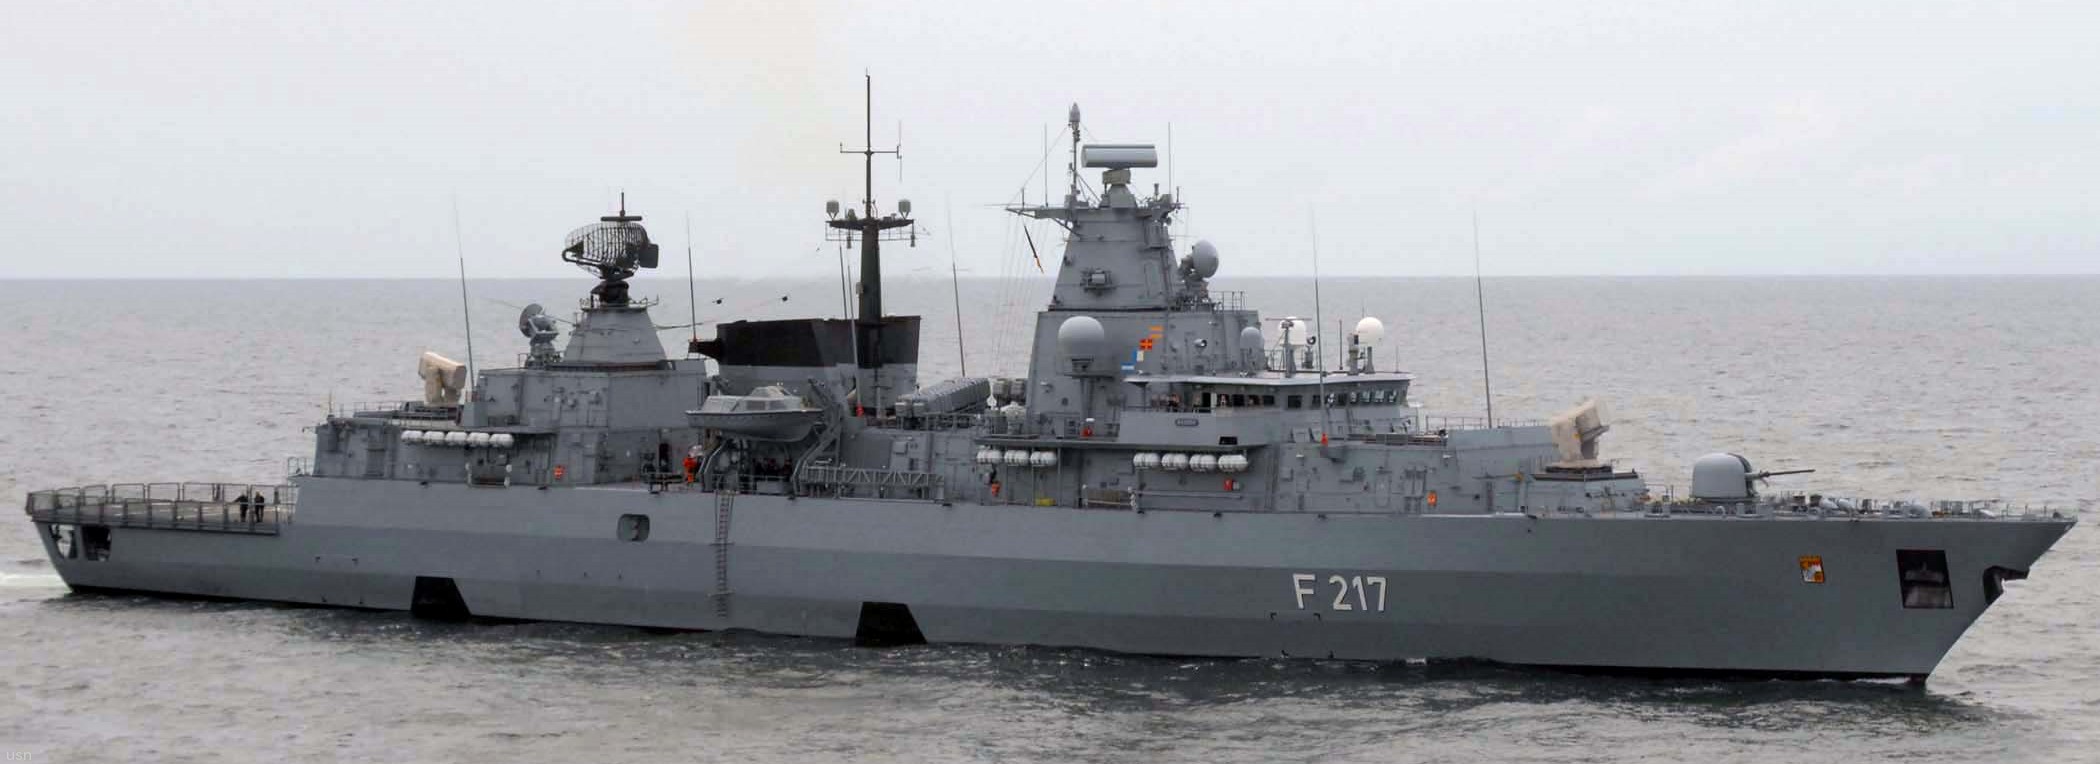 f-217 fgs bayern type 123 brandenburg class frigate german navy 10